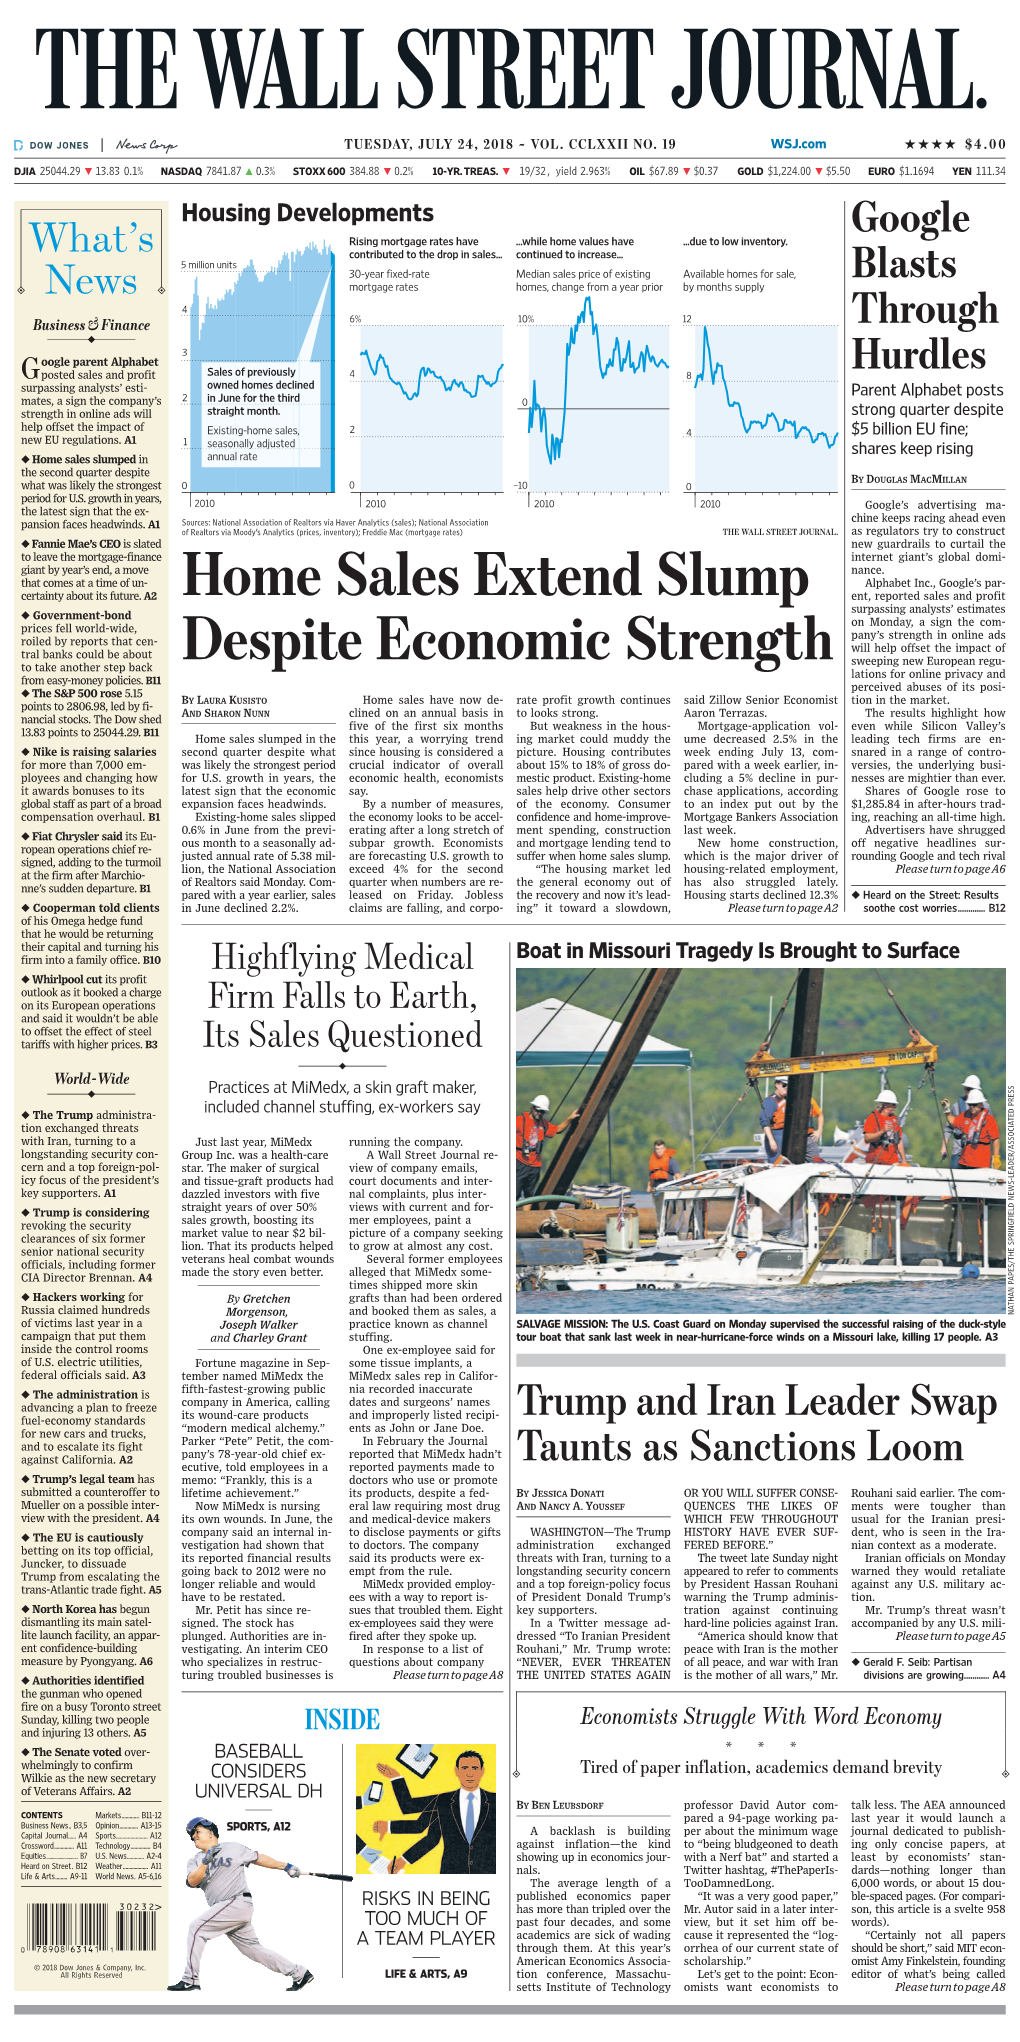 Home Sales Extend Slump Despite Economic Strength